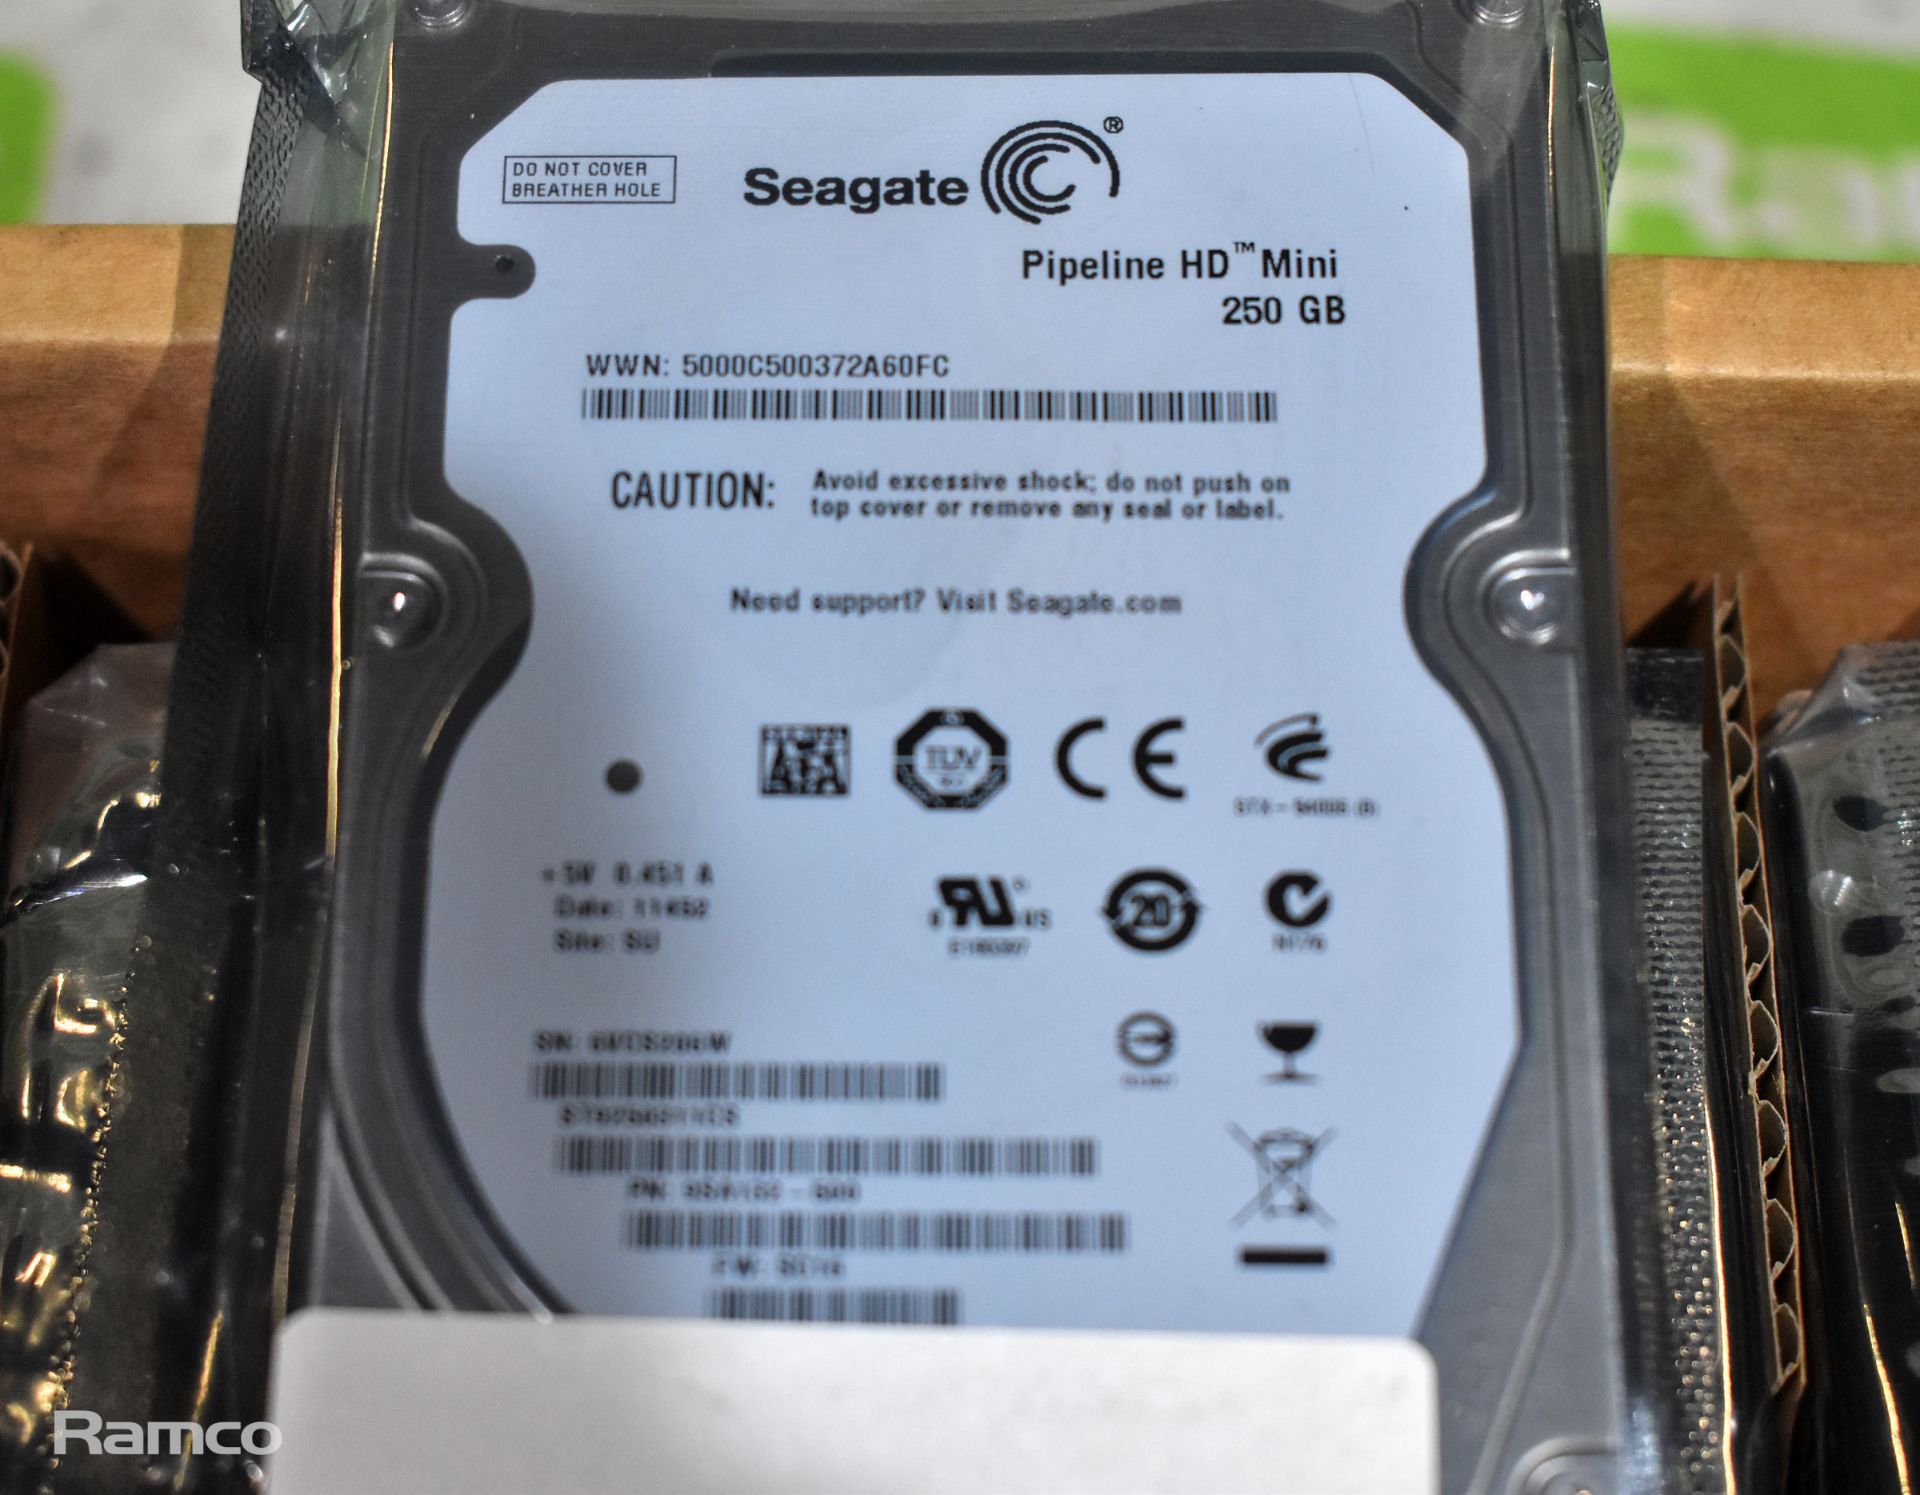 20x Seagate Pipeline HD mini 250GB hard drives - Image 2 of 3